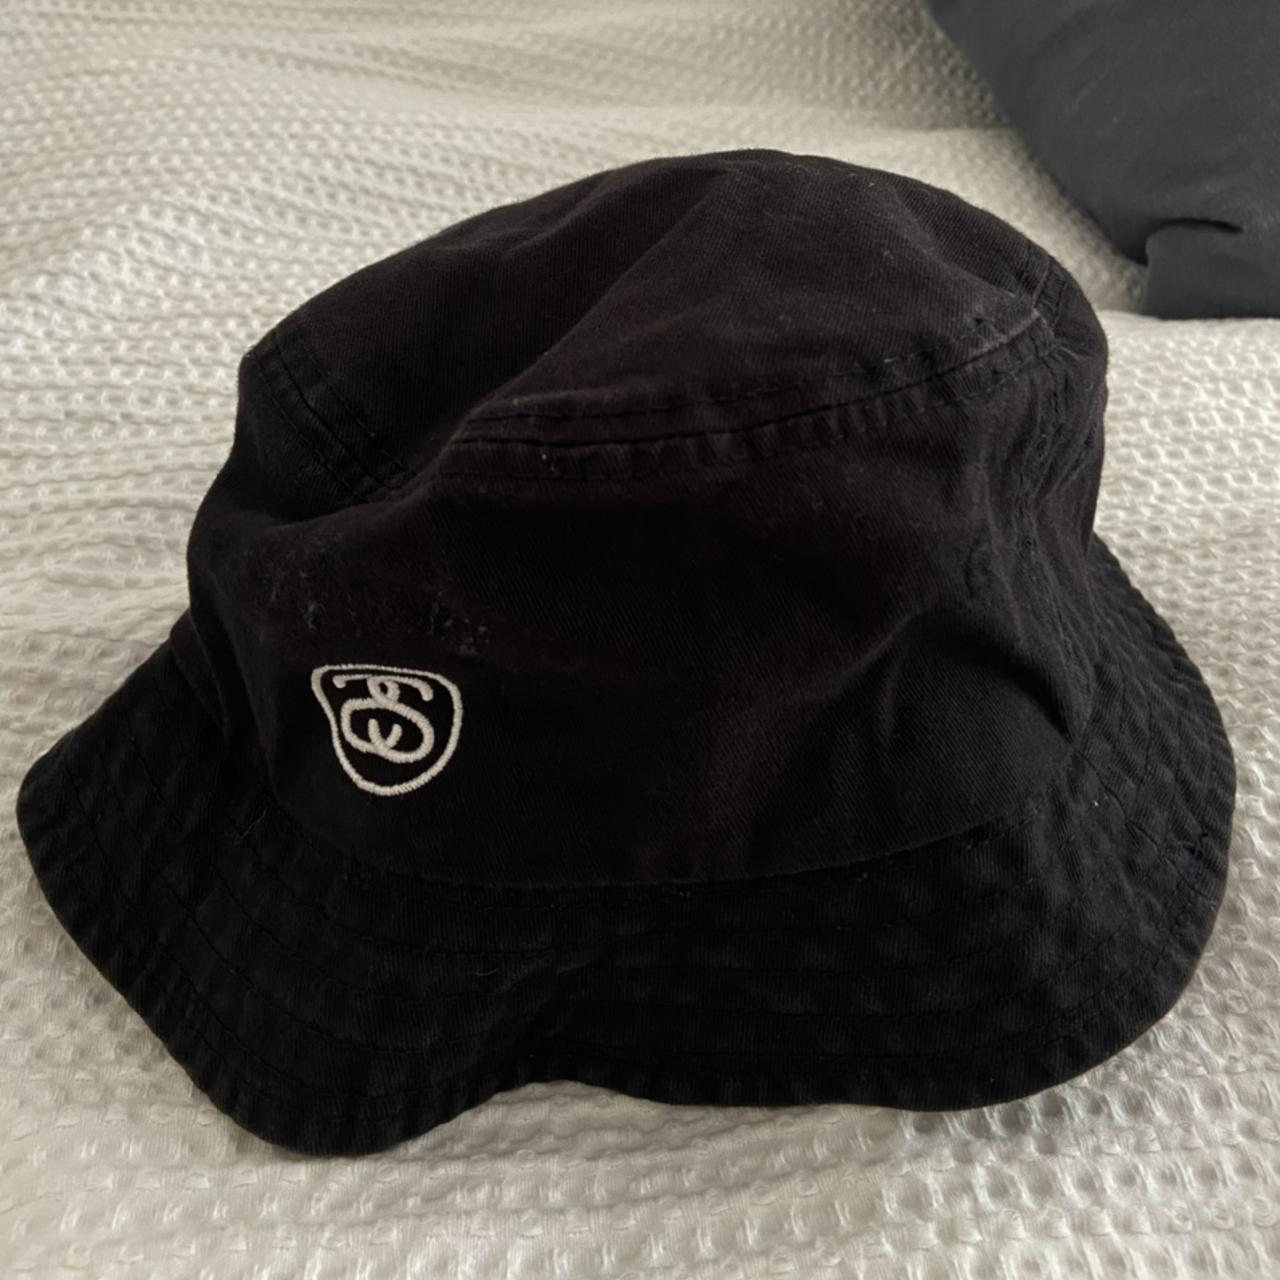 Stussy bucket hat in black - medium size. In good... - Depop